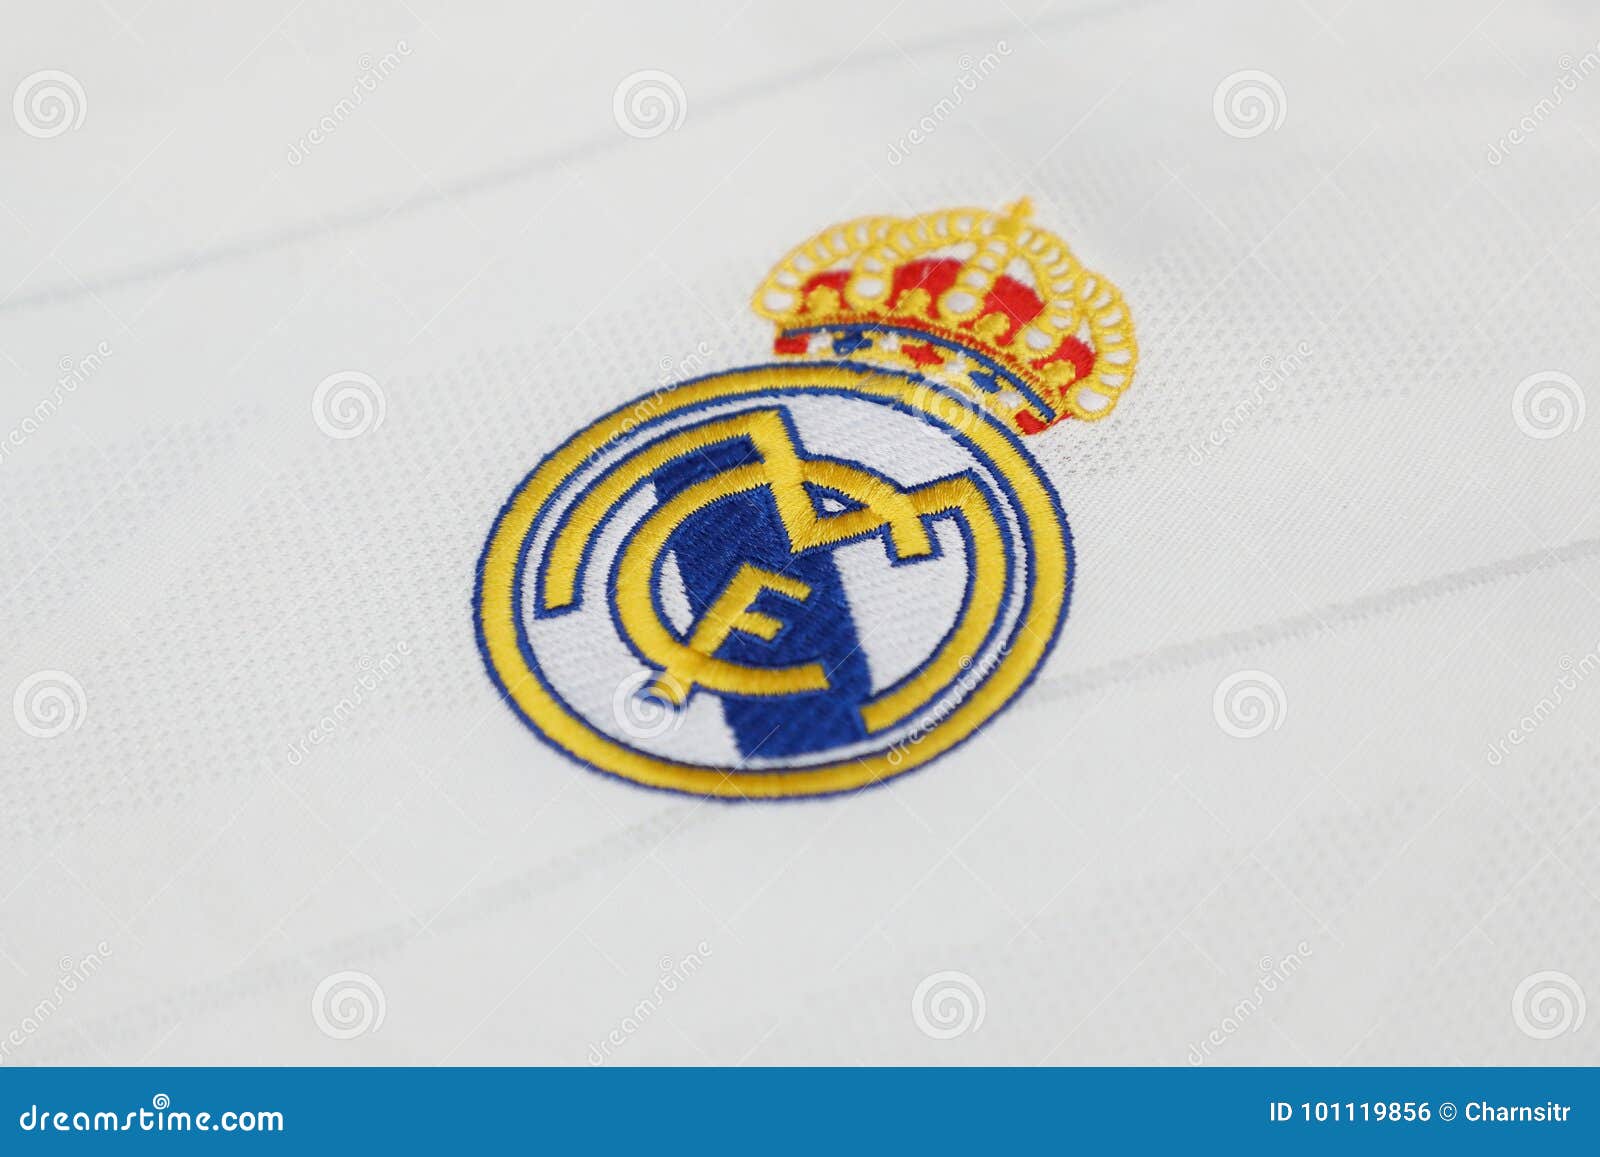 real madrid jersey logo